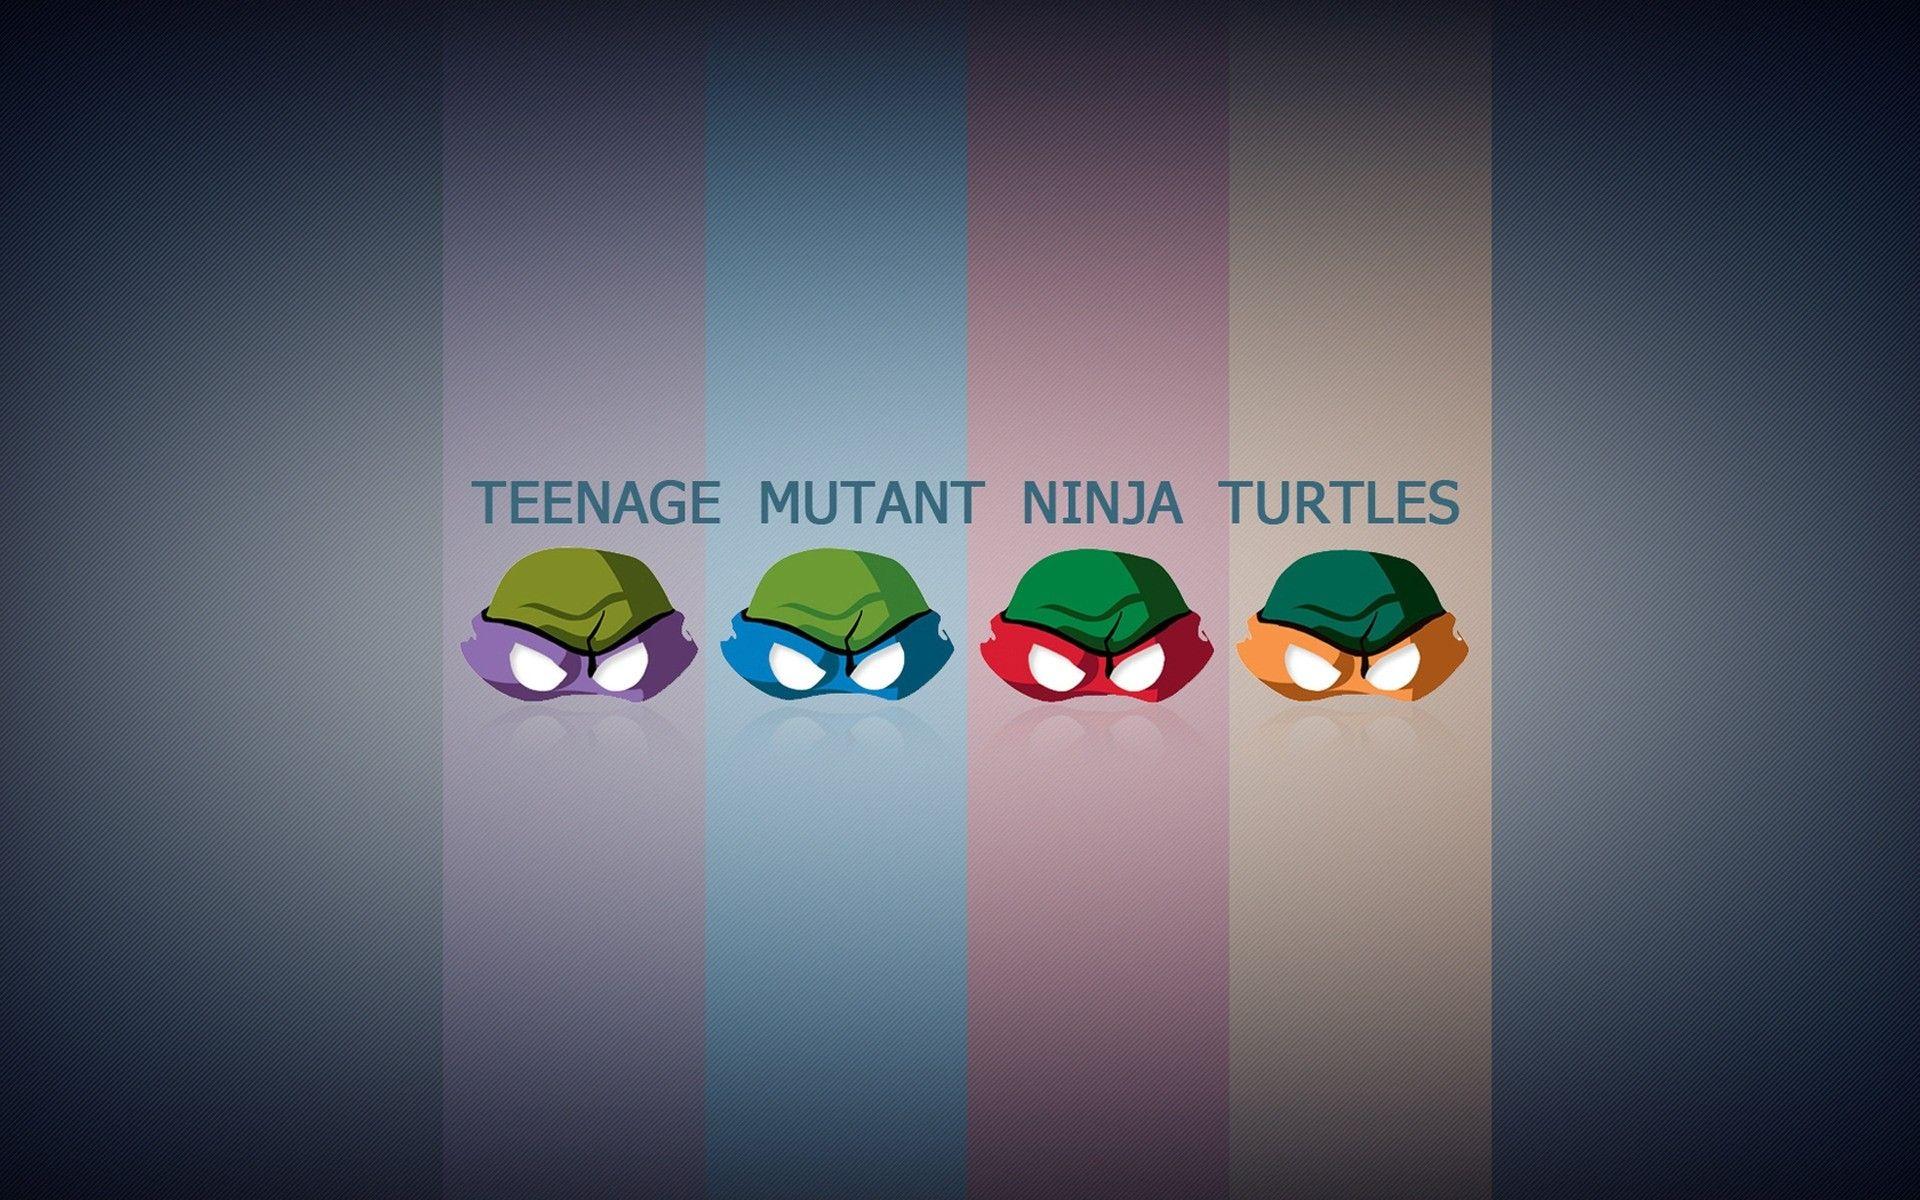 Teengae Mutant Ninja Turtles. iPhone wallpaper for free